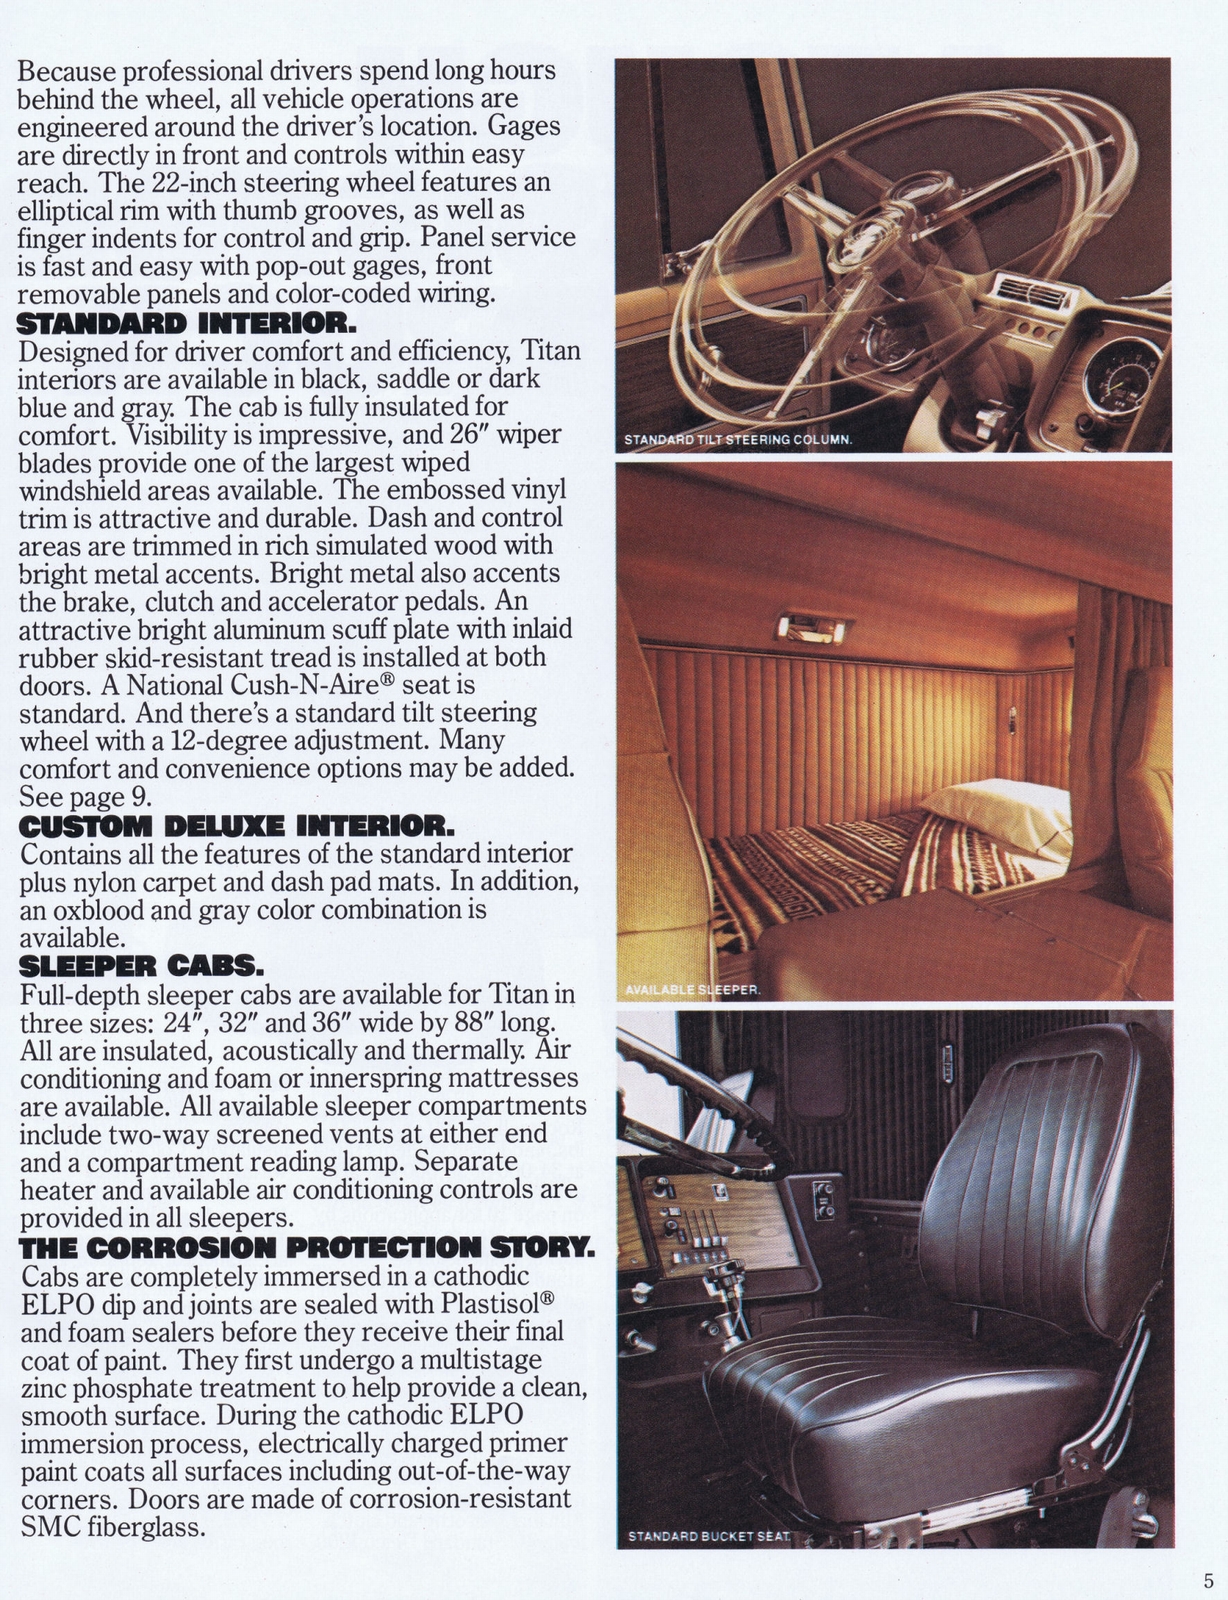 n_1980 Chevrolet Titan-05.jpg